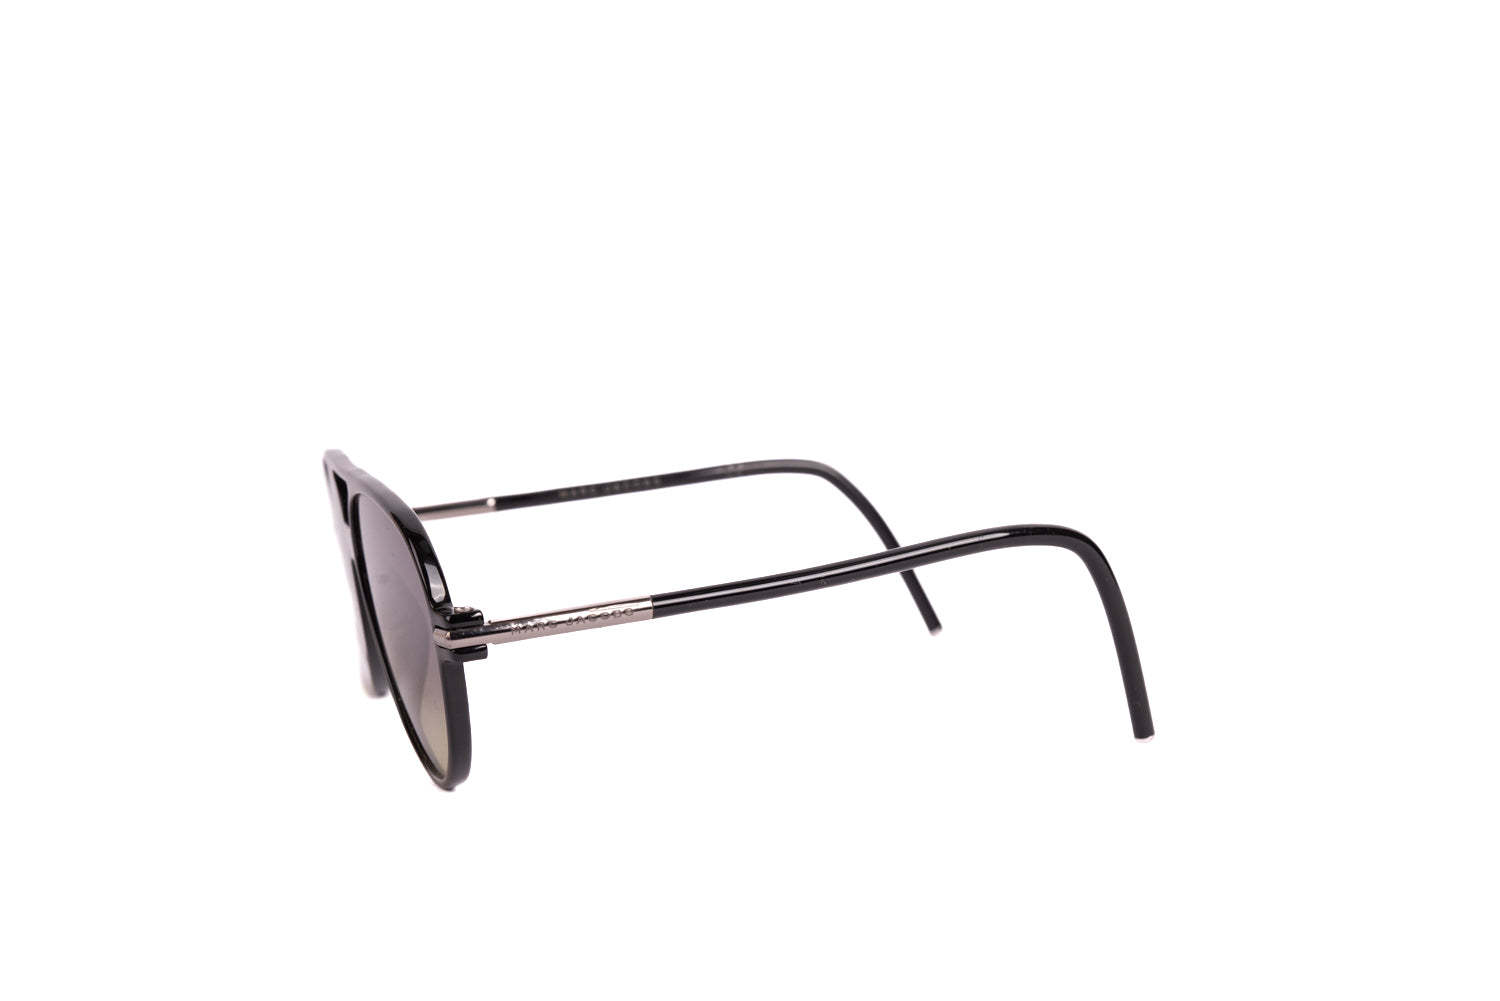 Black Shaded Sunglasses